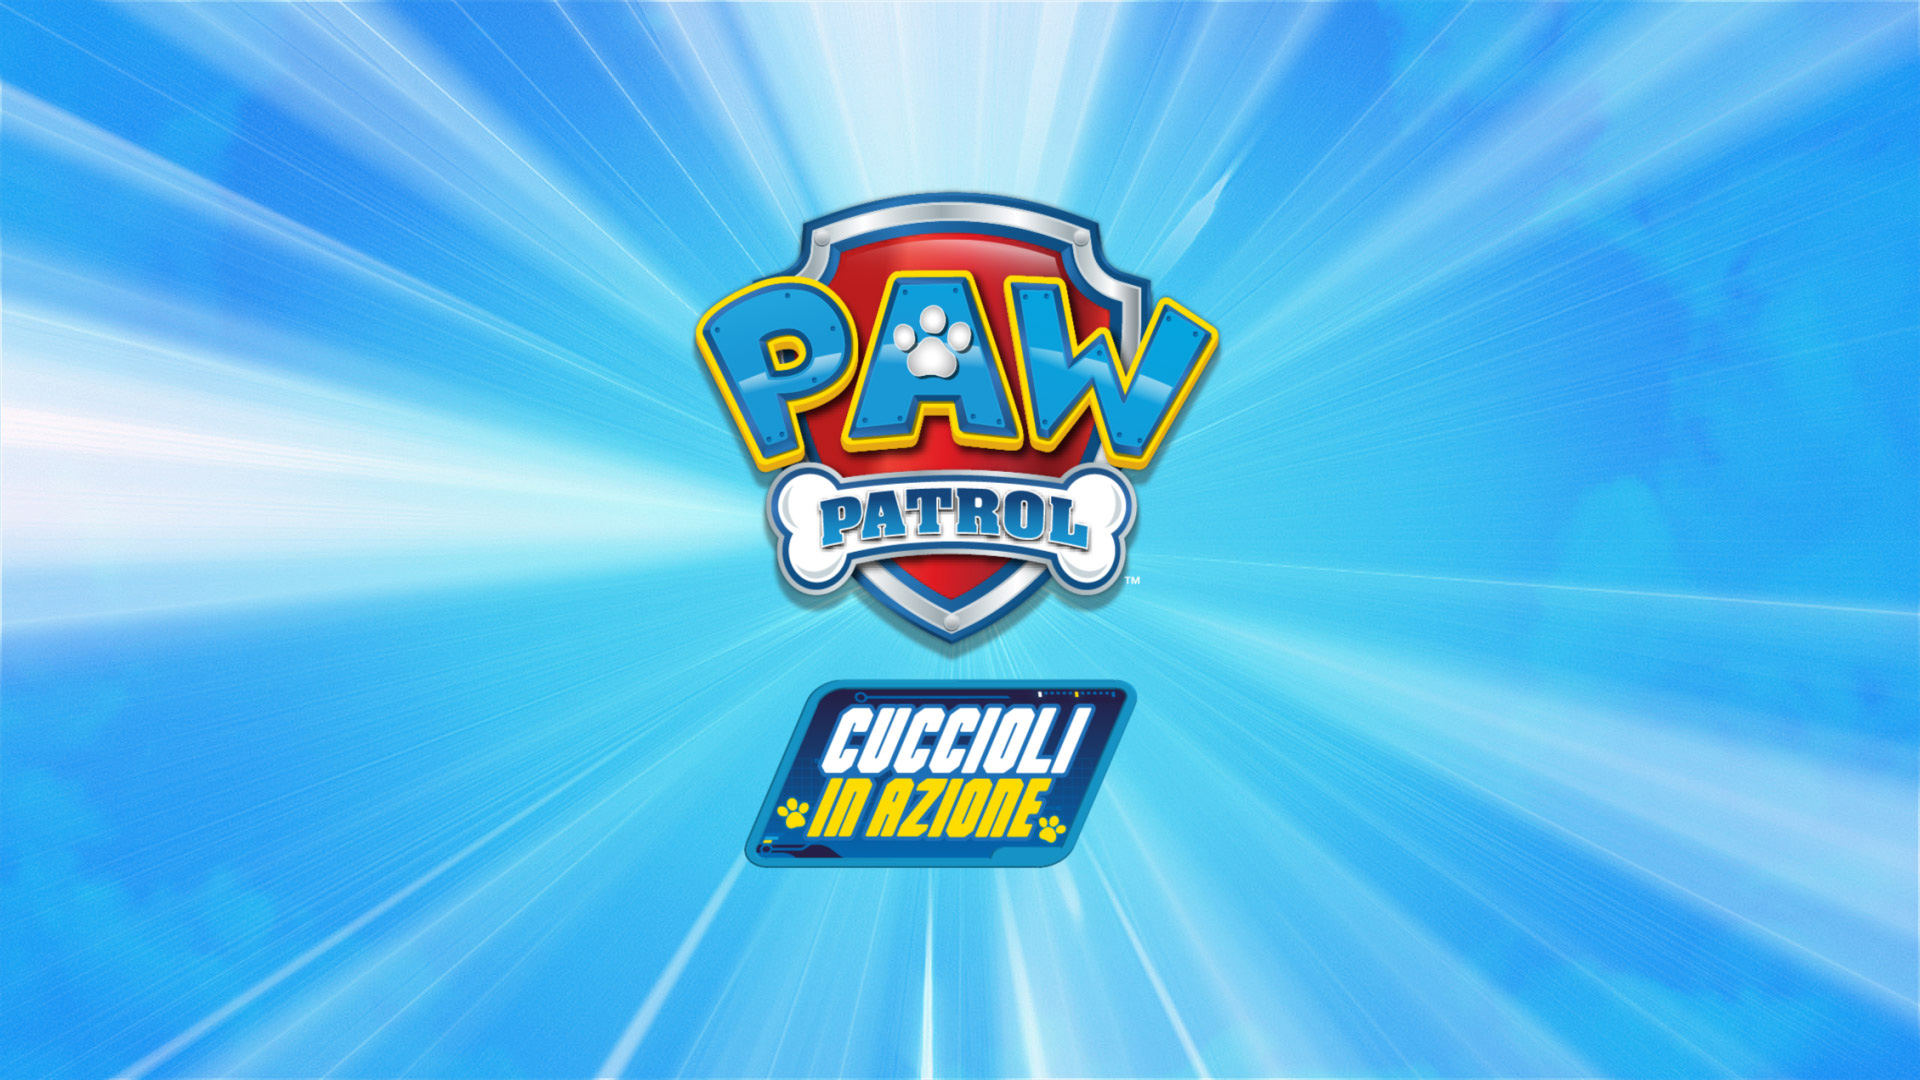 Pop-up channel Paw Patrol - Cuccioli in azione